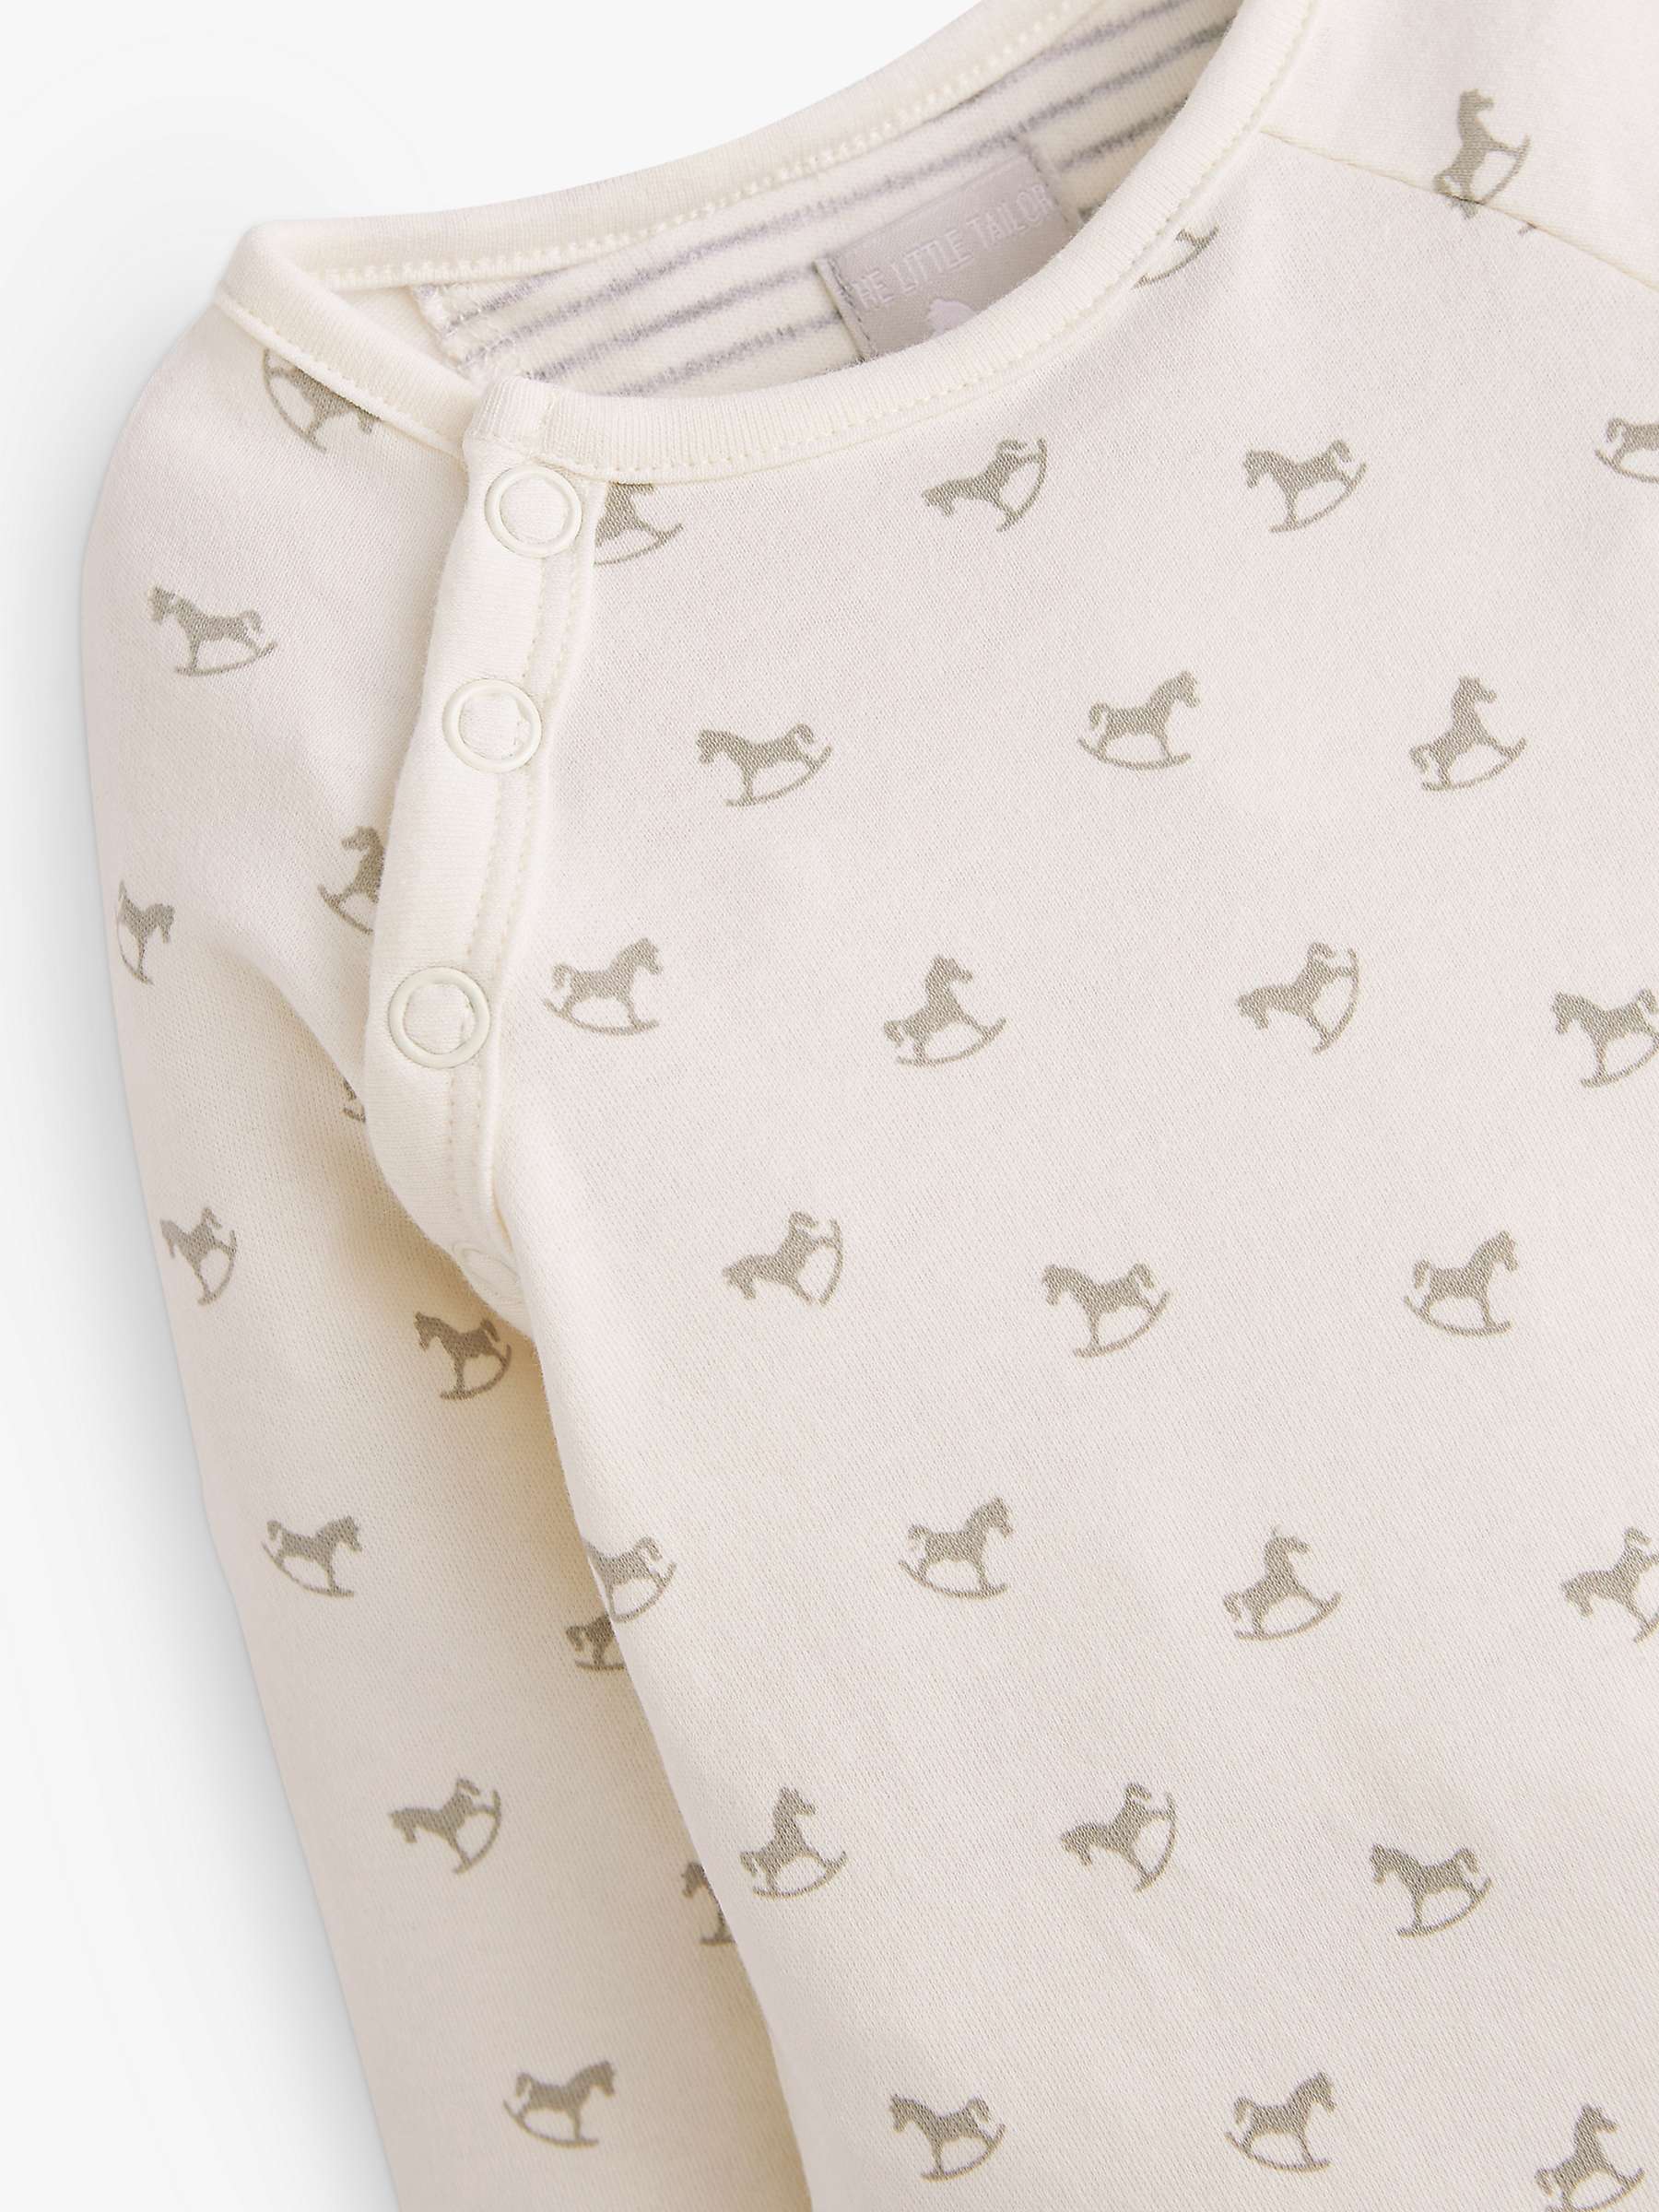 Buy The Little Tailor Baby Cotton Rocking Horse Sleepsuit & Hat Set Online at johnlewis.com